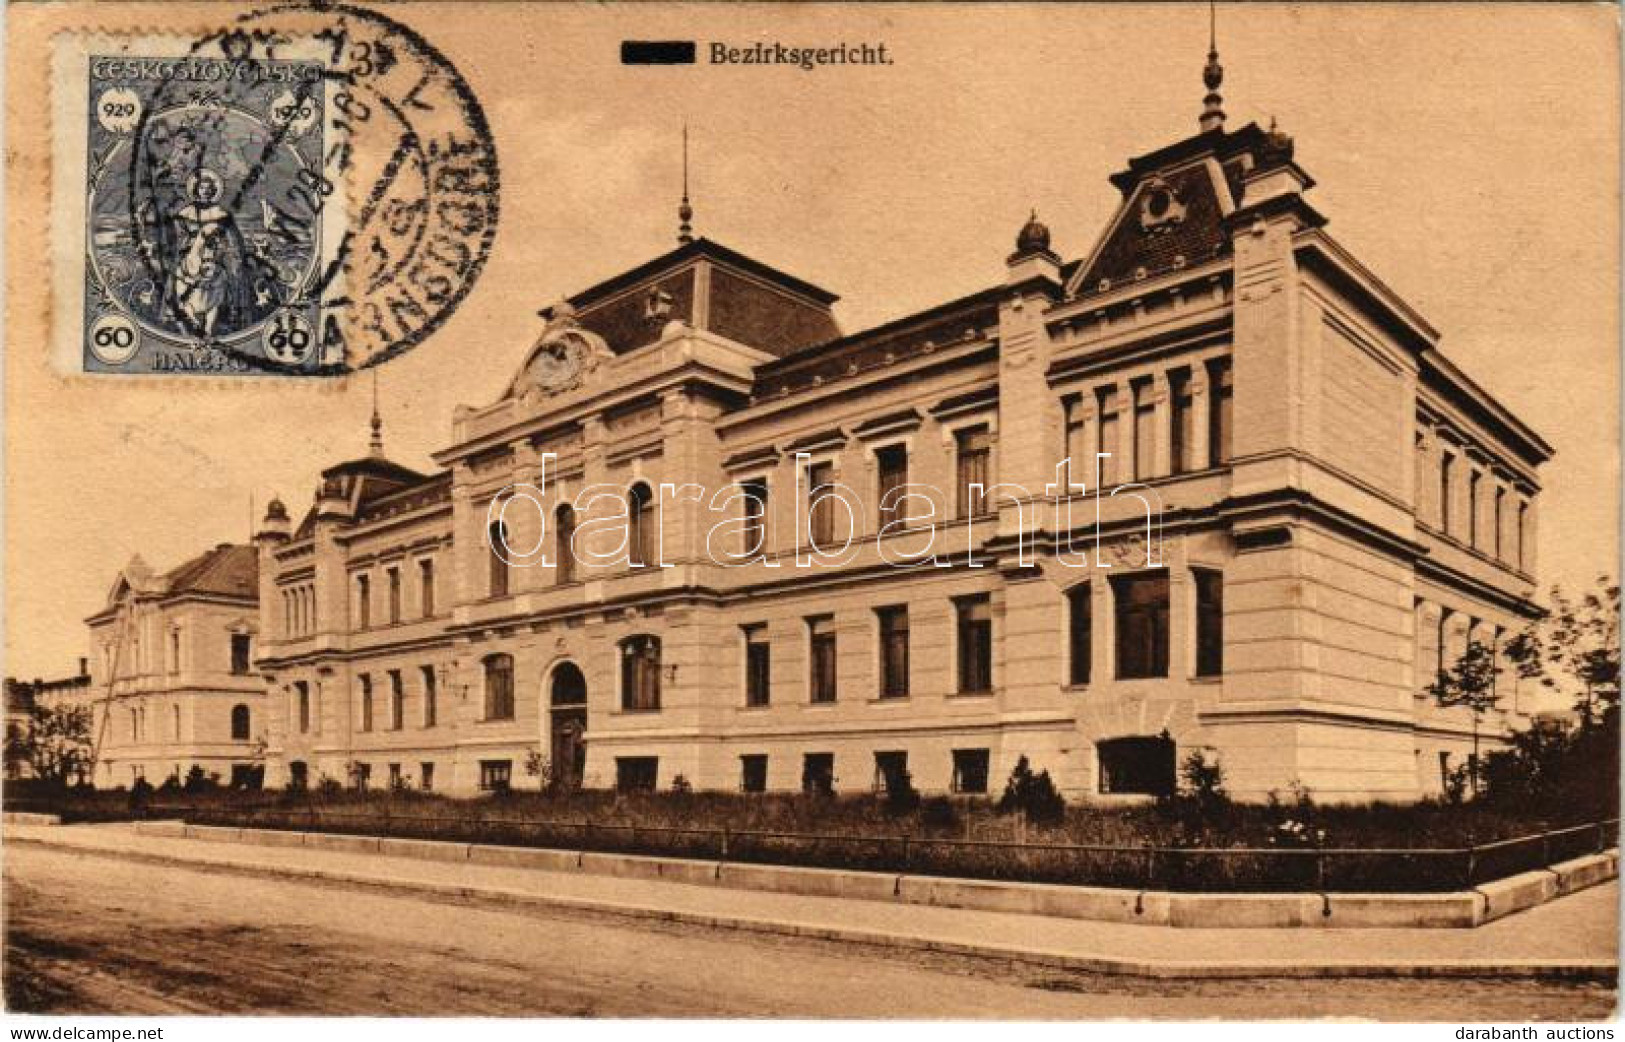 T3 1929 Varnsdorf, Warnsdorf; Bezirksgericht / District Court (EB) - Non Classés